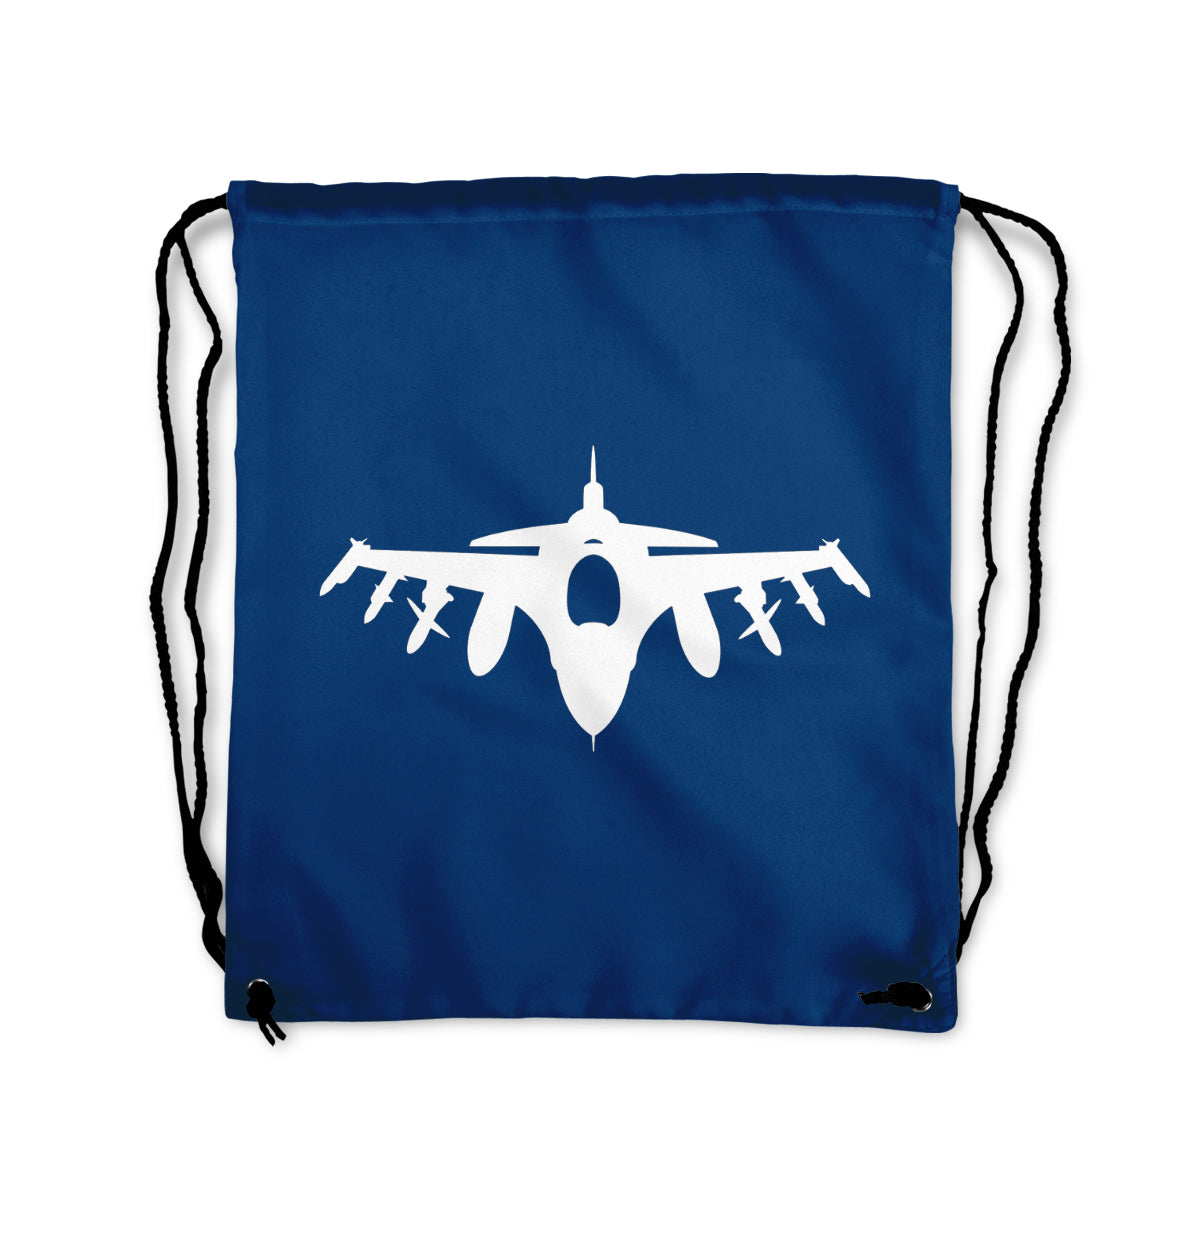 Fighting Falcon F16 Silhouette Designed Drawstring Bags